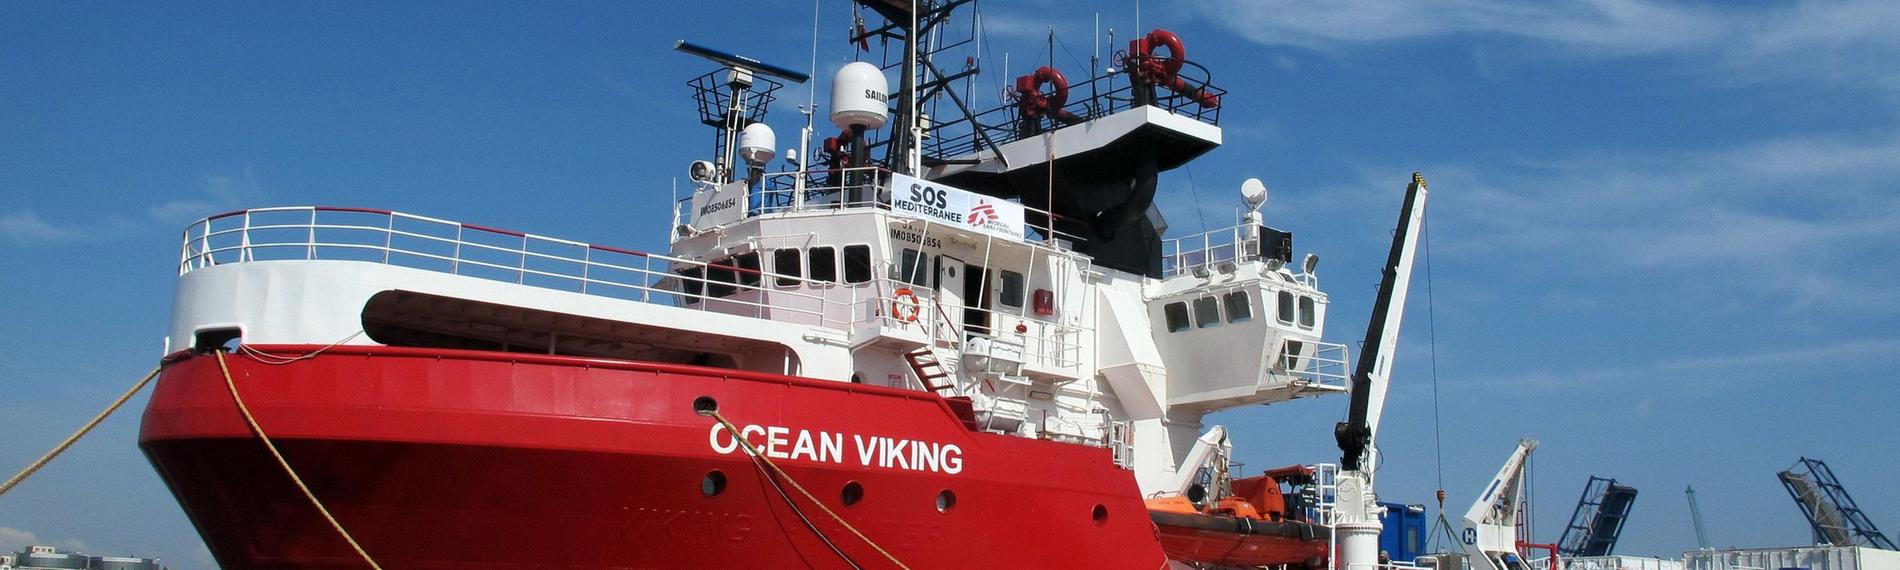 Das private Rettungsschiff "Ocean Viking". Archivbild